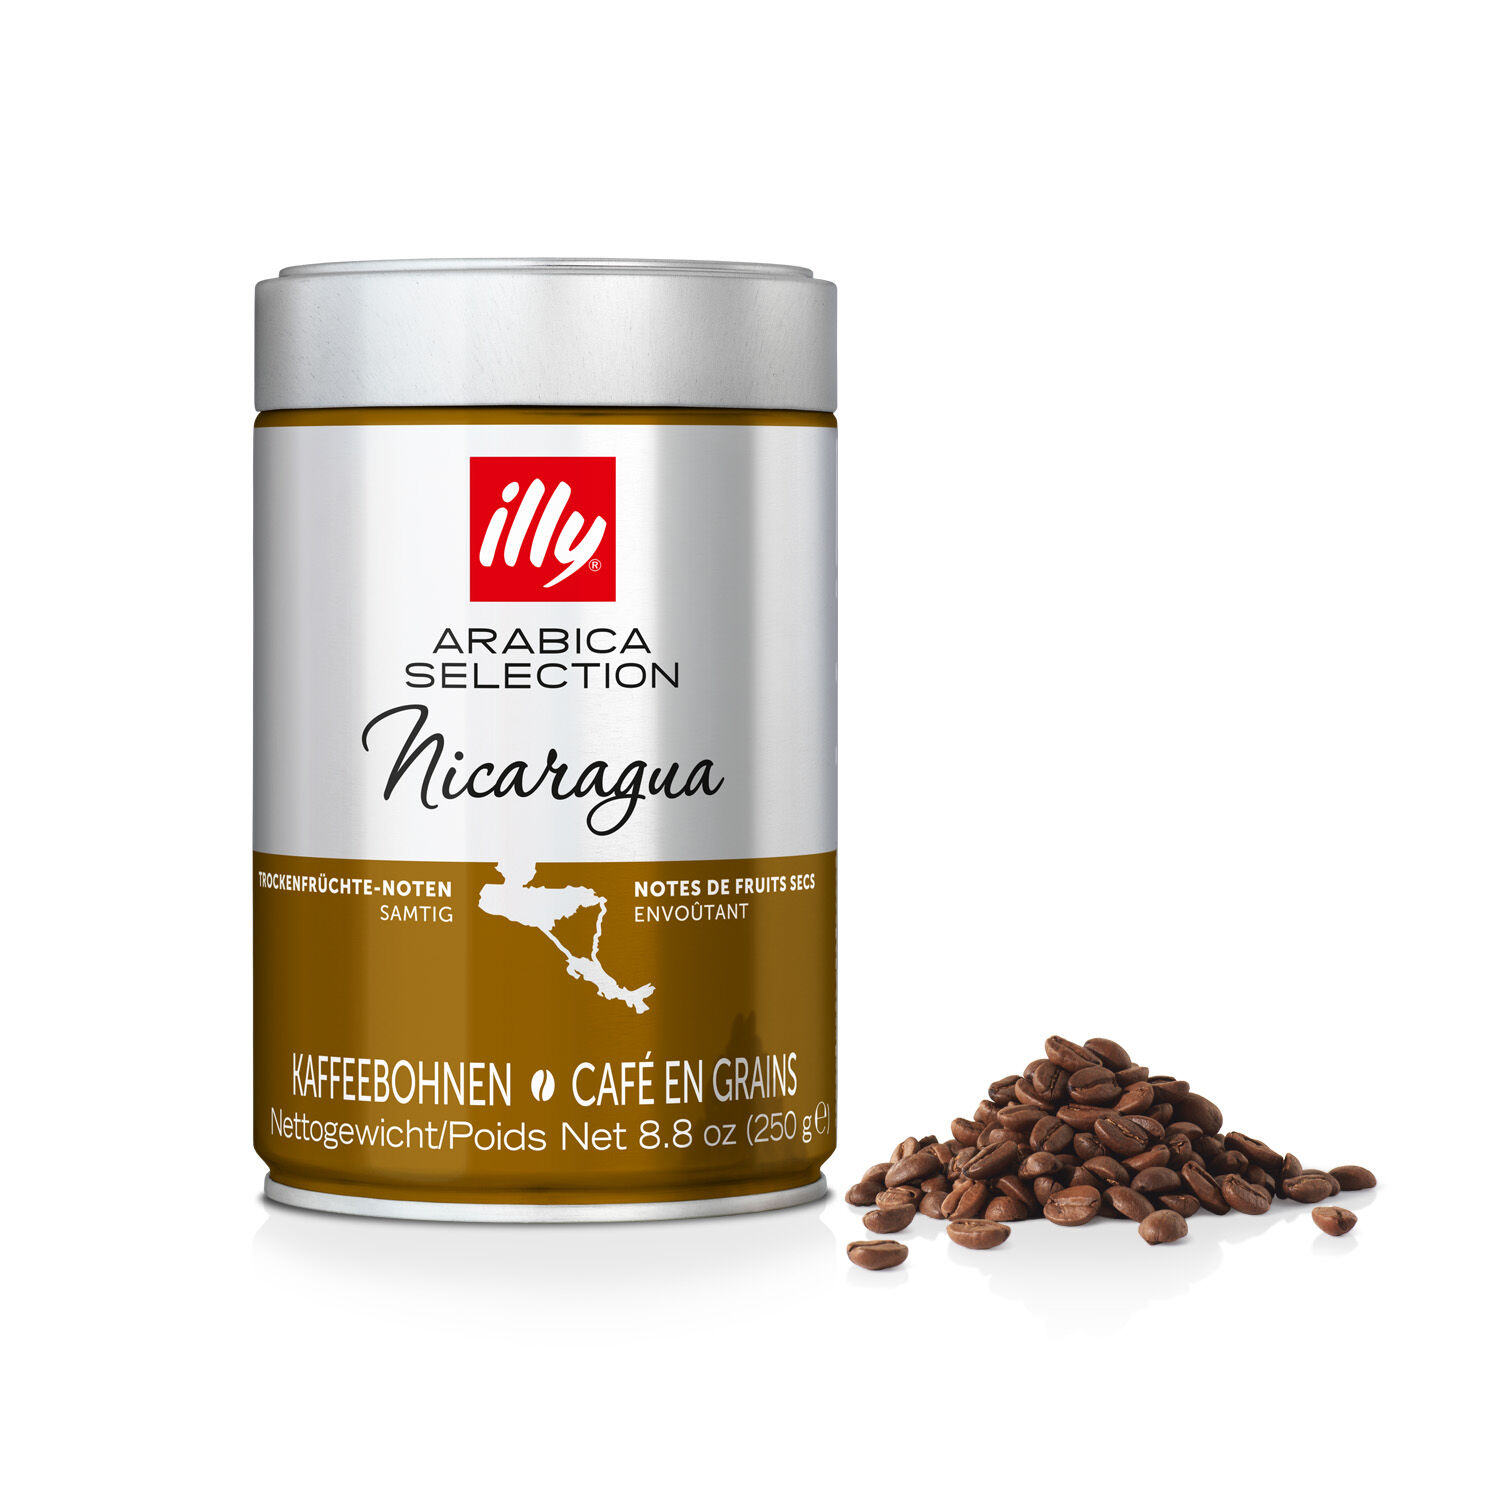 Espressobohnen der Arabica Selection aus Nicaragua